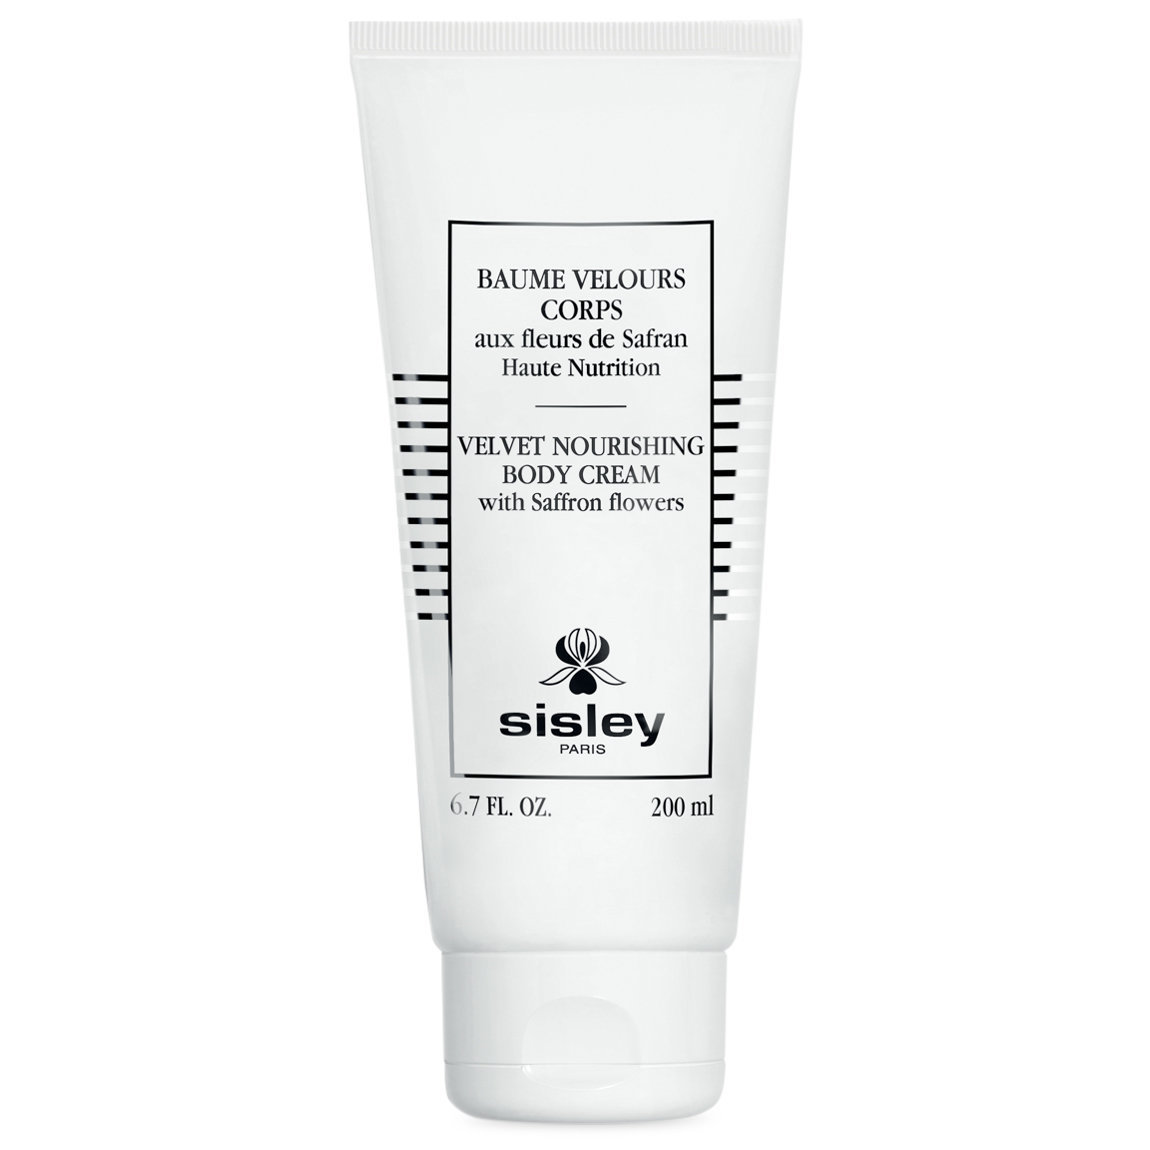 Sisley-Paris Velvet Nourishing Body Cream With Saffron Flowers alternative view 1 - product swatch.